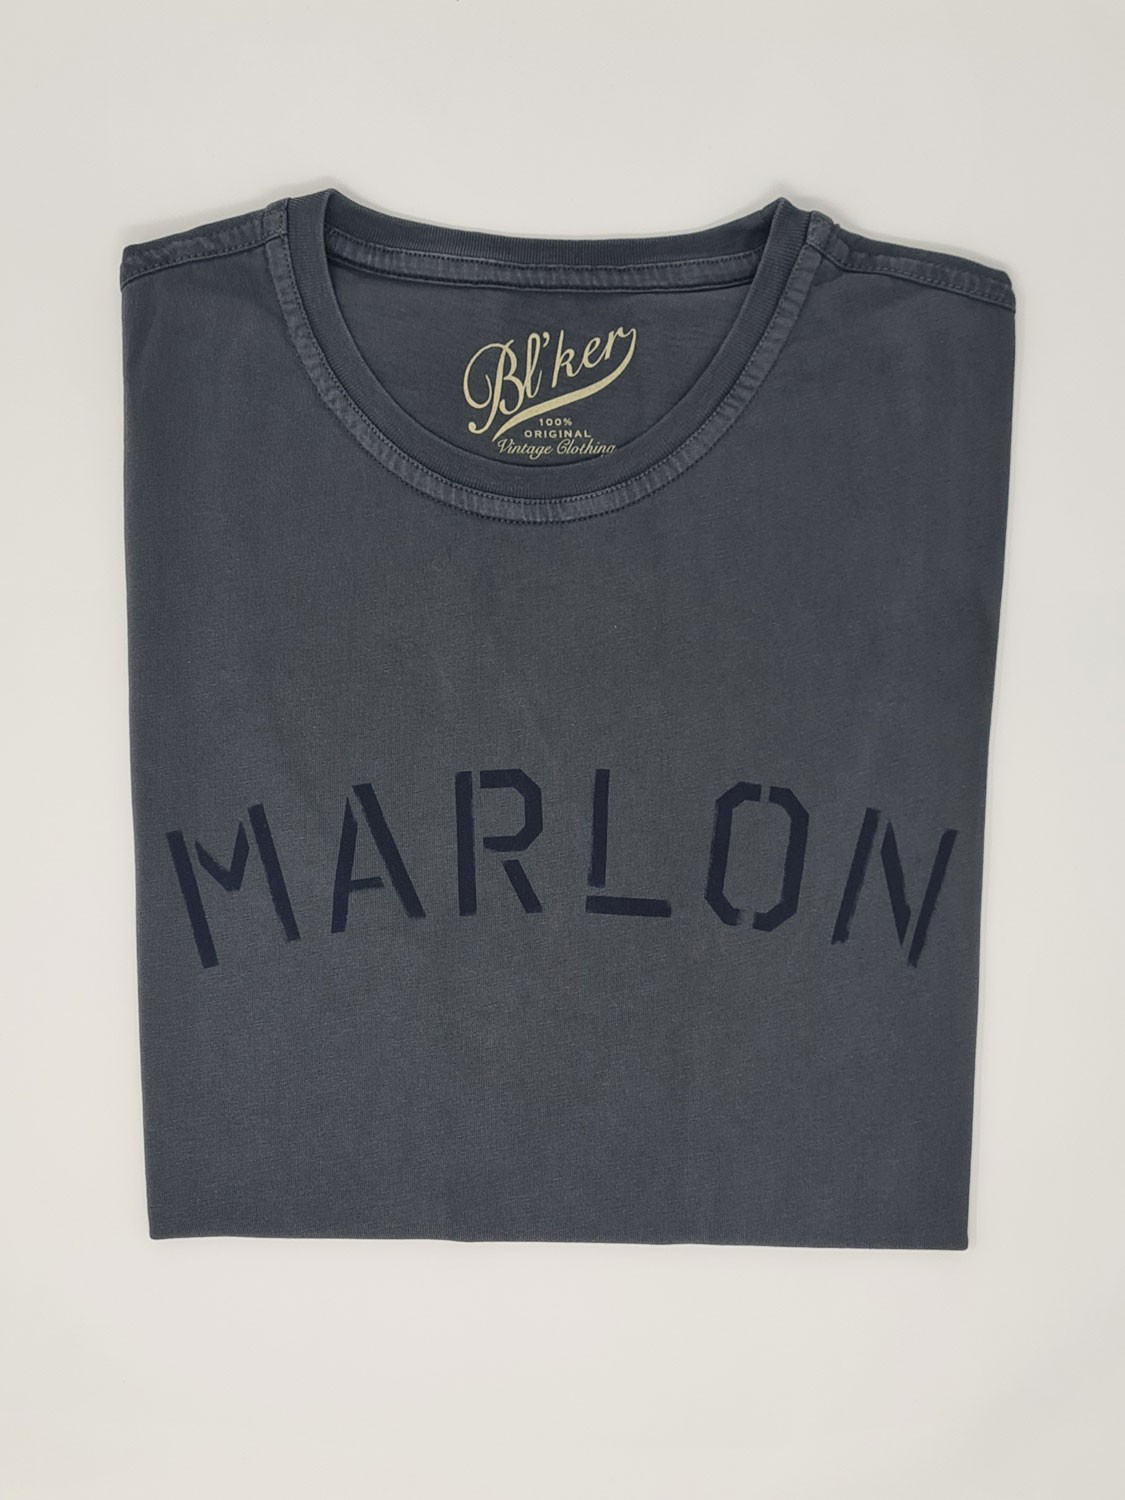 Bl'ker Men's T-shirt Graphic Marlon